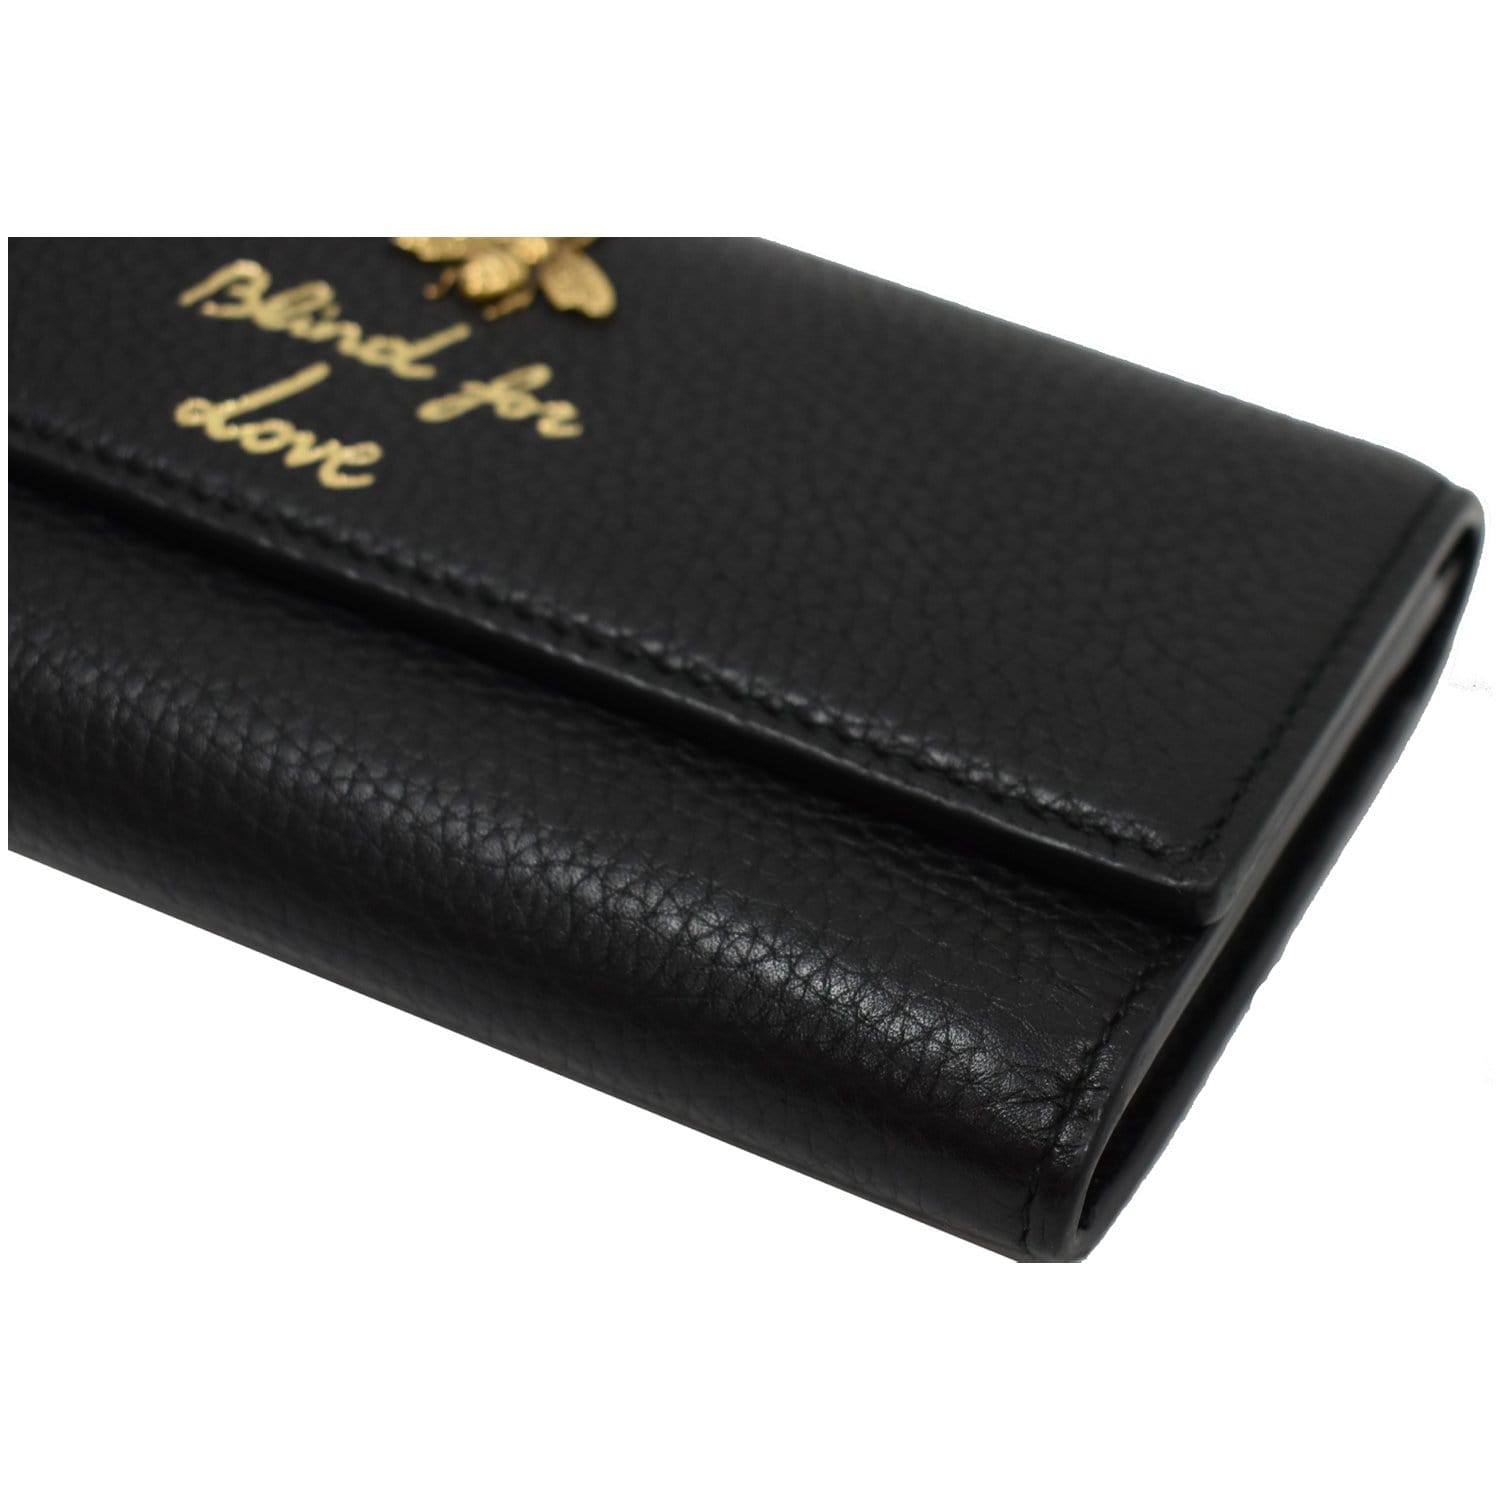 Authenticated Gucci Bee Star Envelope Portfolio Black Calf Leather